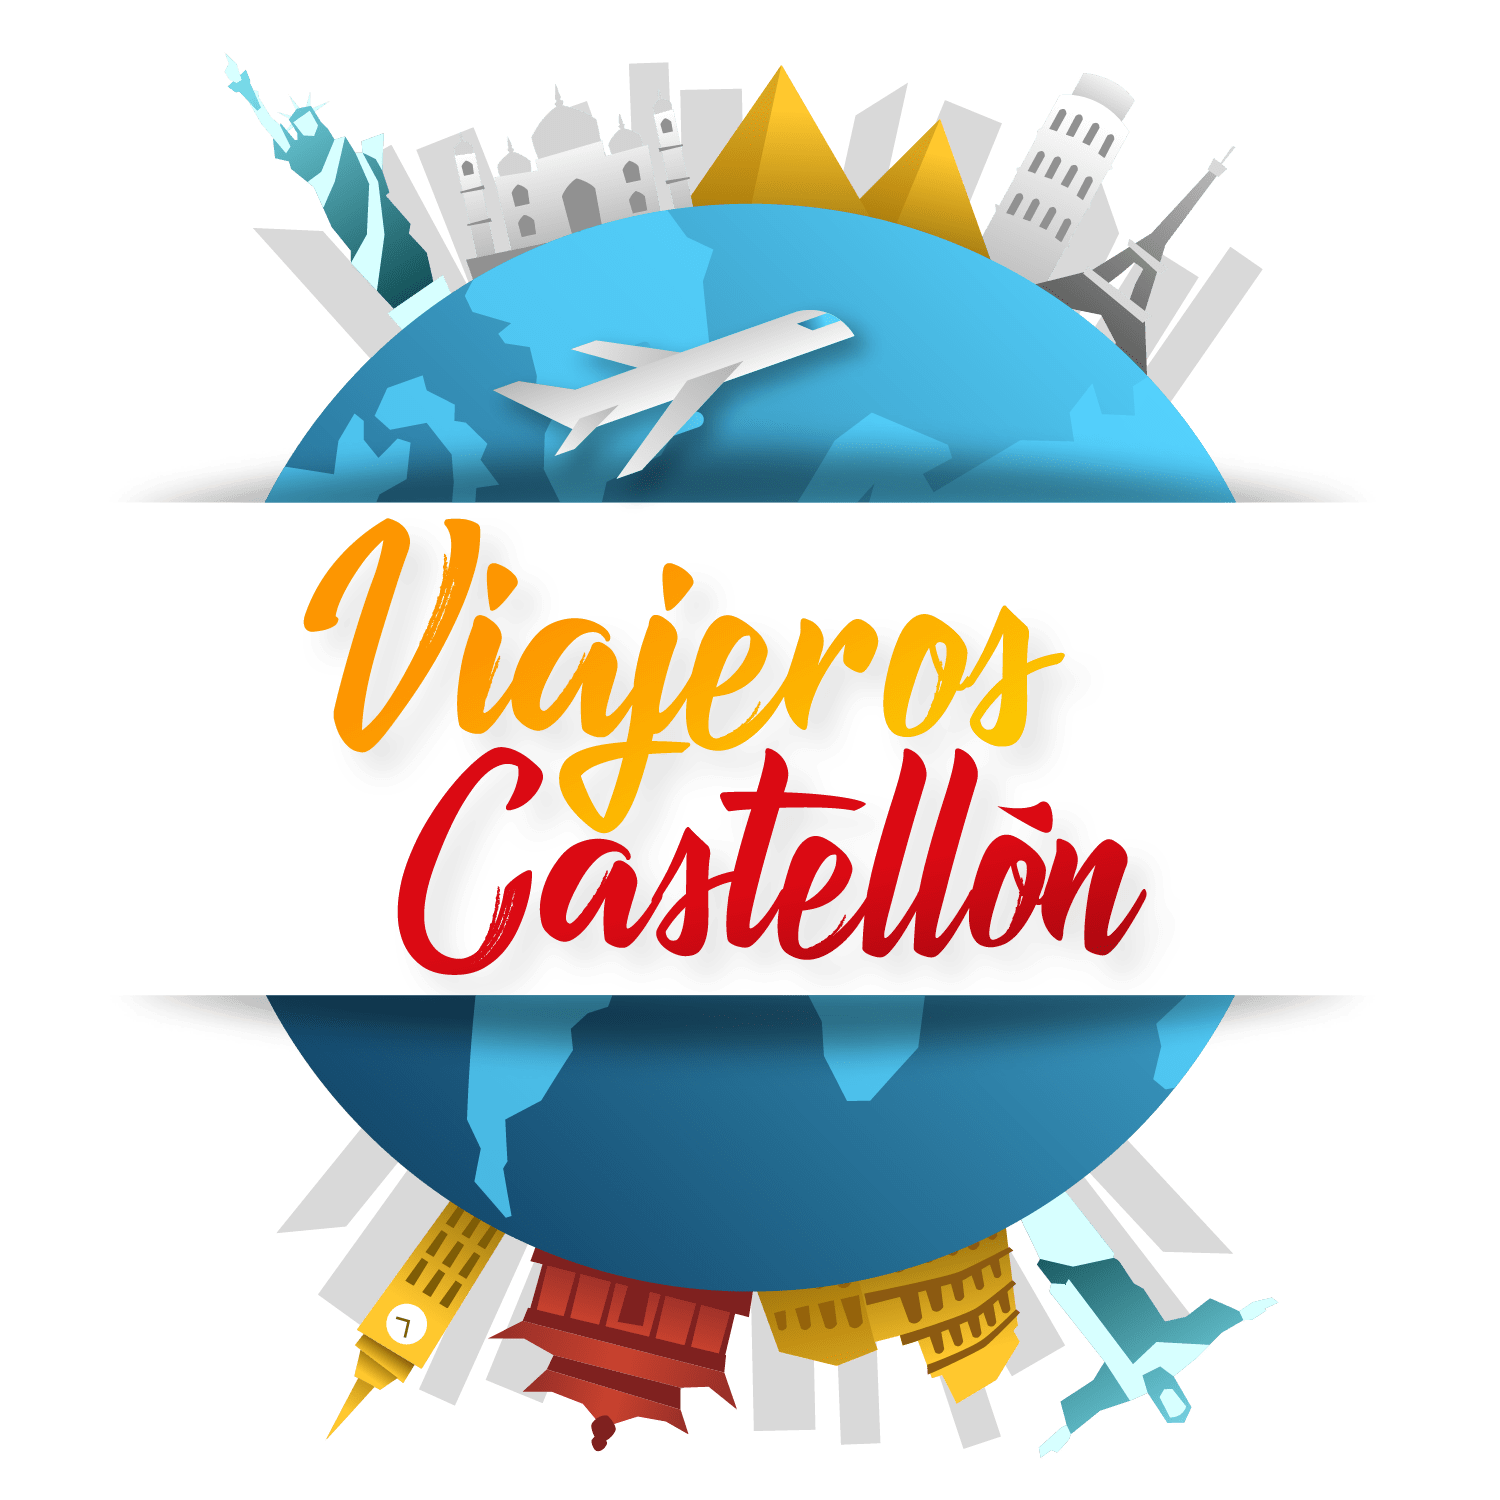 Viajeros de Castellón